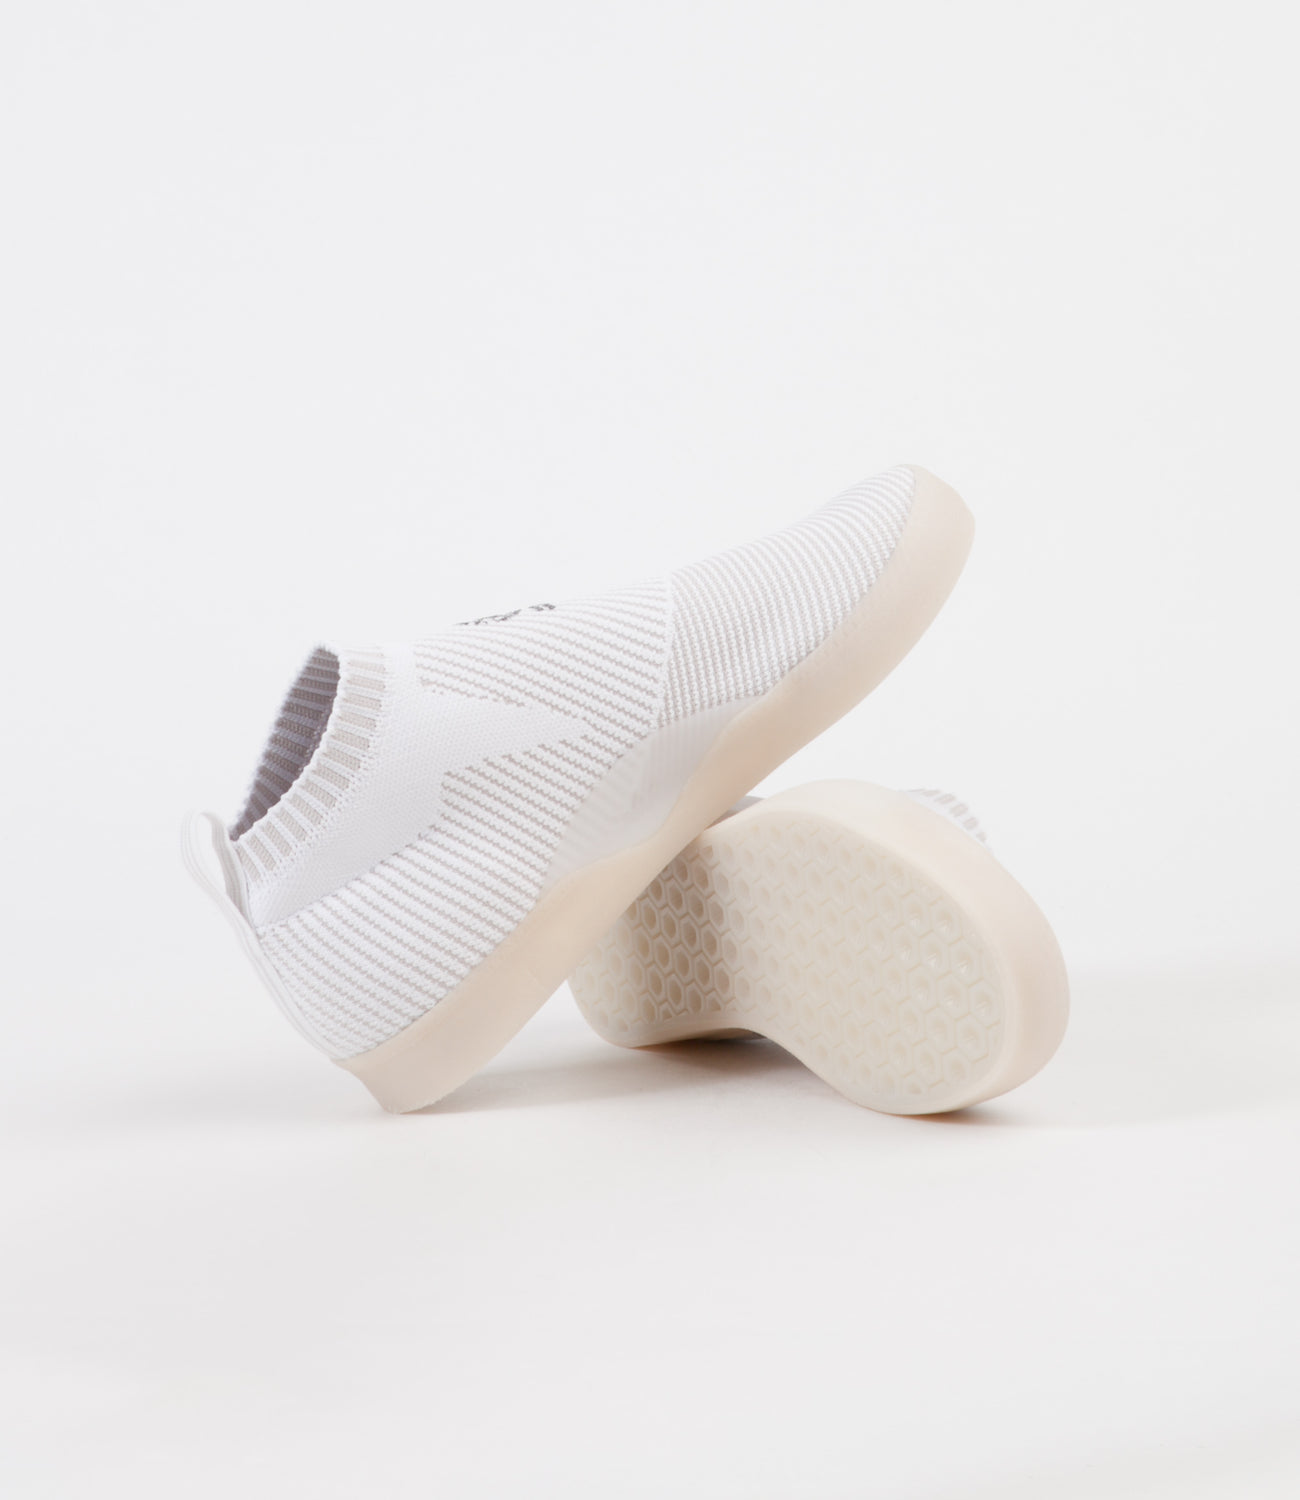 Giraf virkelighed Plenarmøde Adidas 3ST.002 Primeknit Shoes - White / Grey One / Core Black | Flatspot